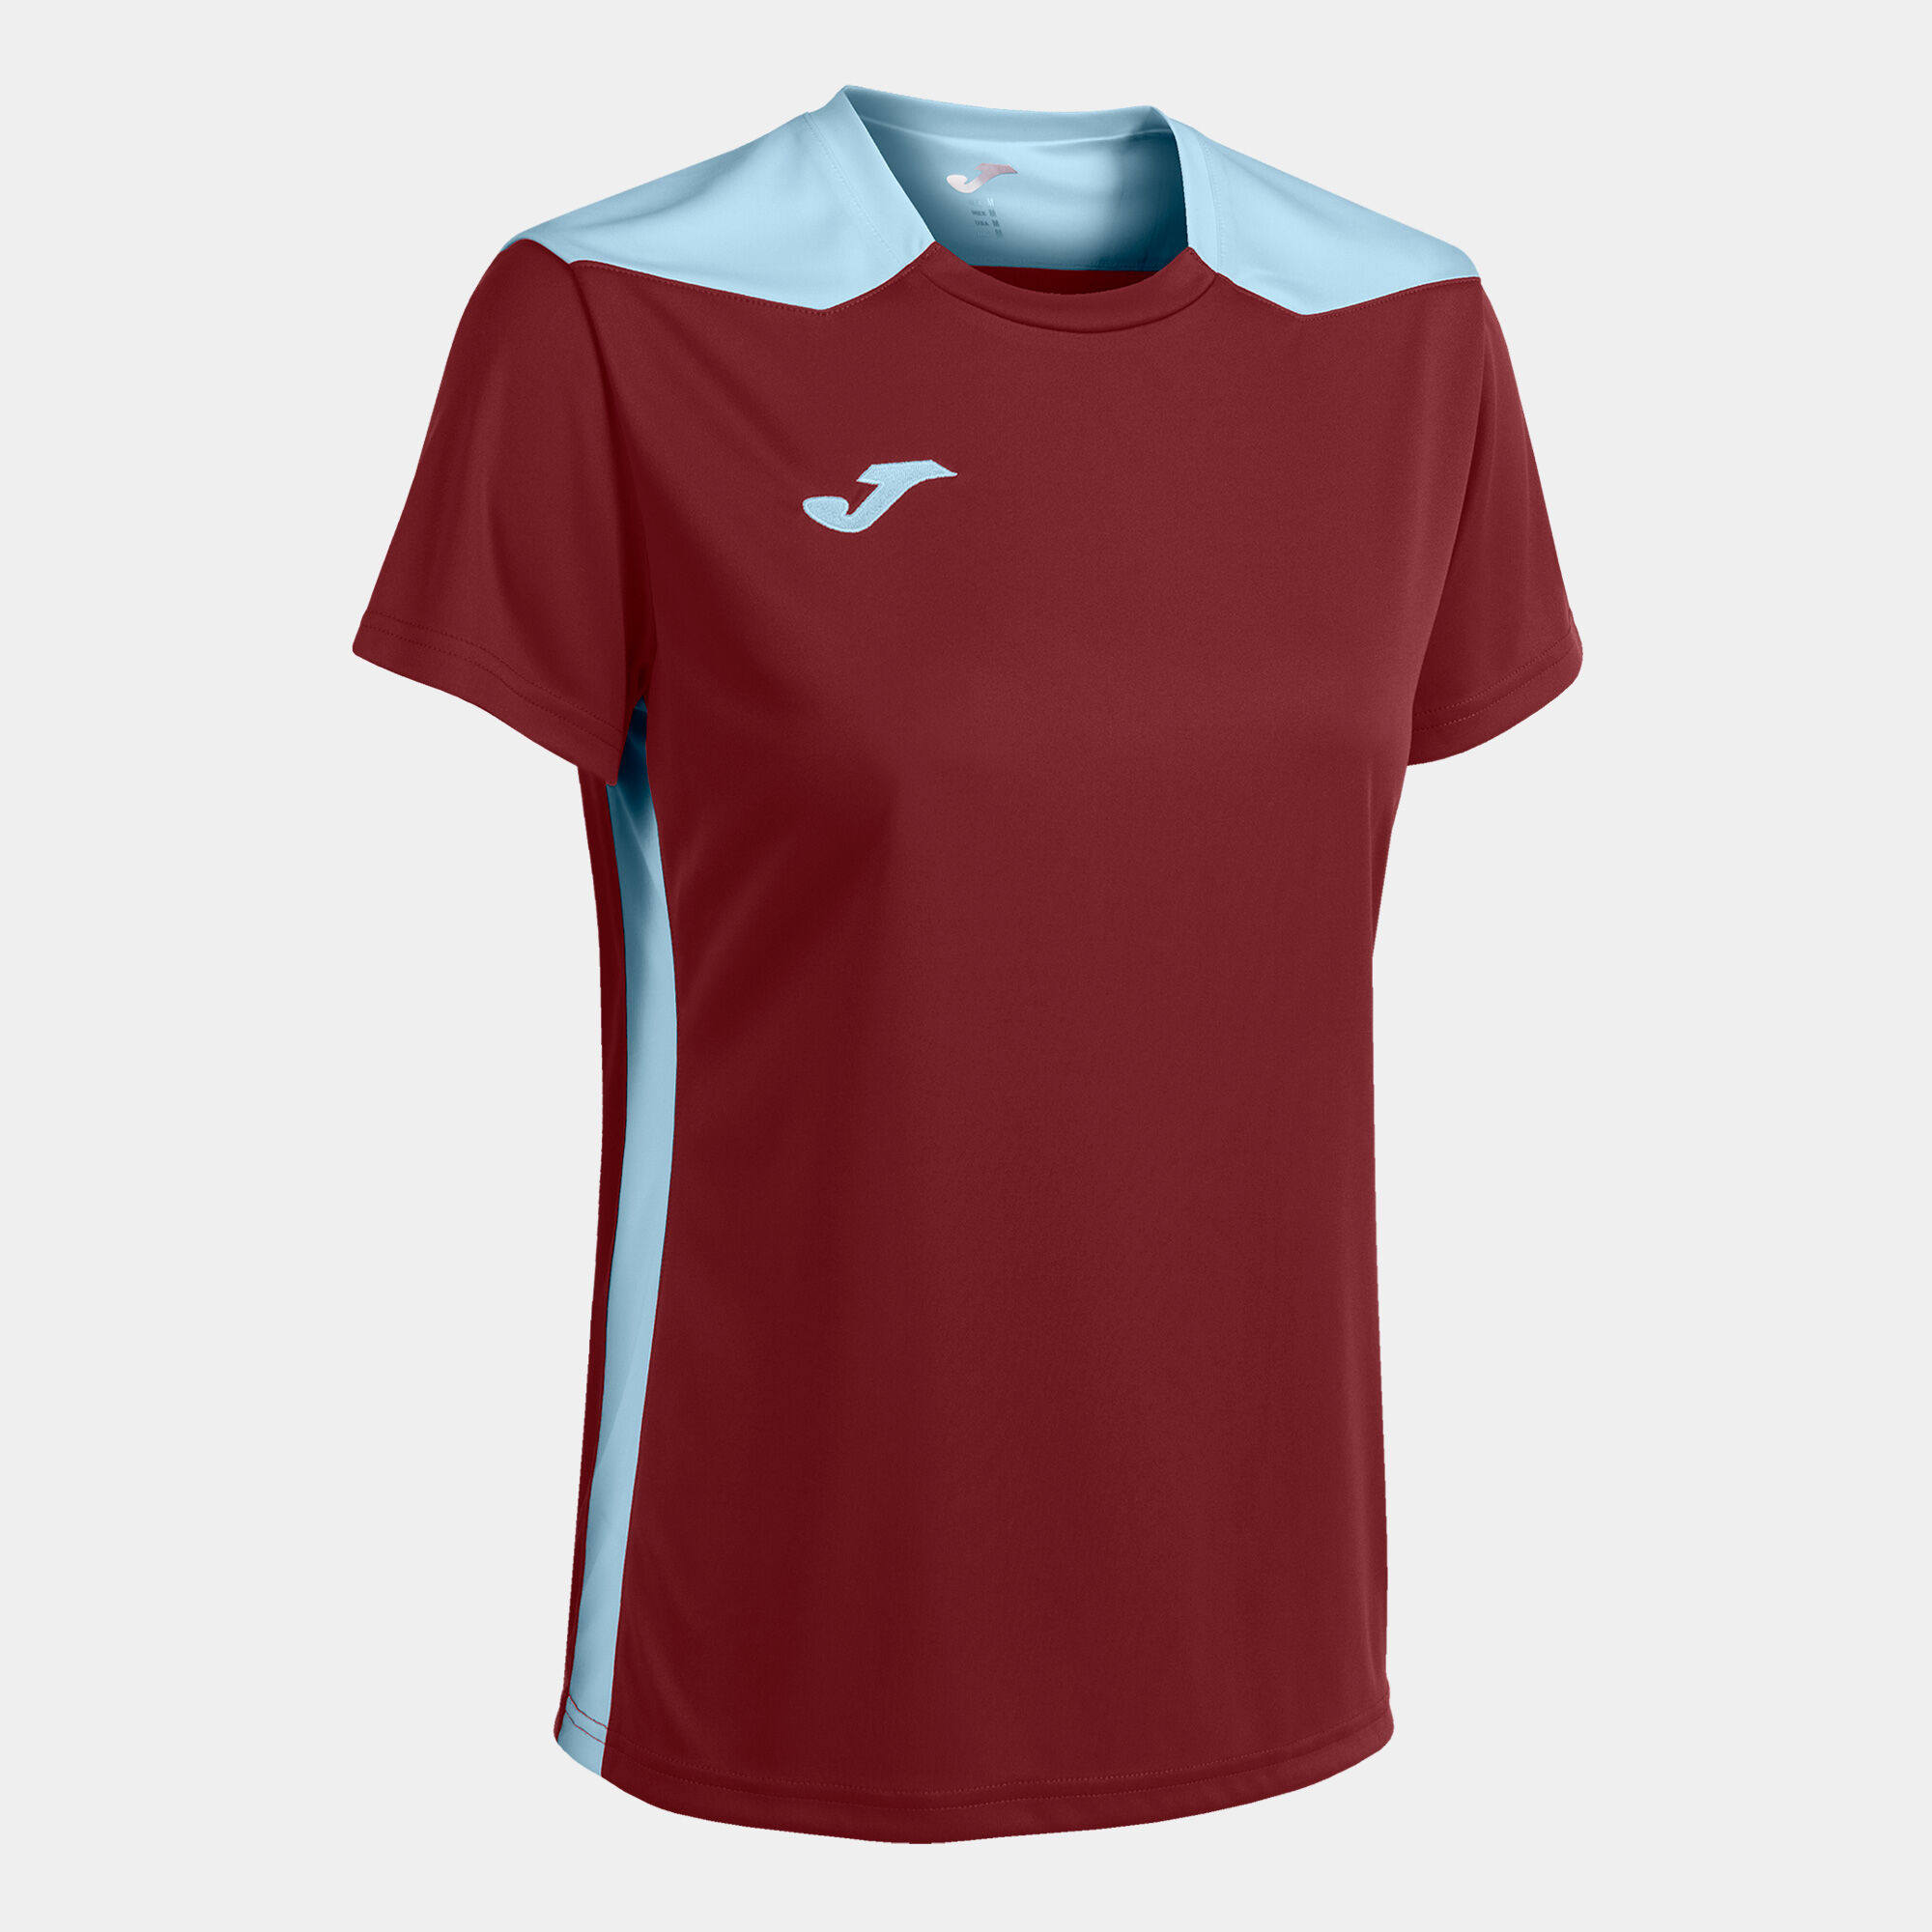 Shirt short sleeve woman Championship VI burgundy sky blue